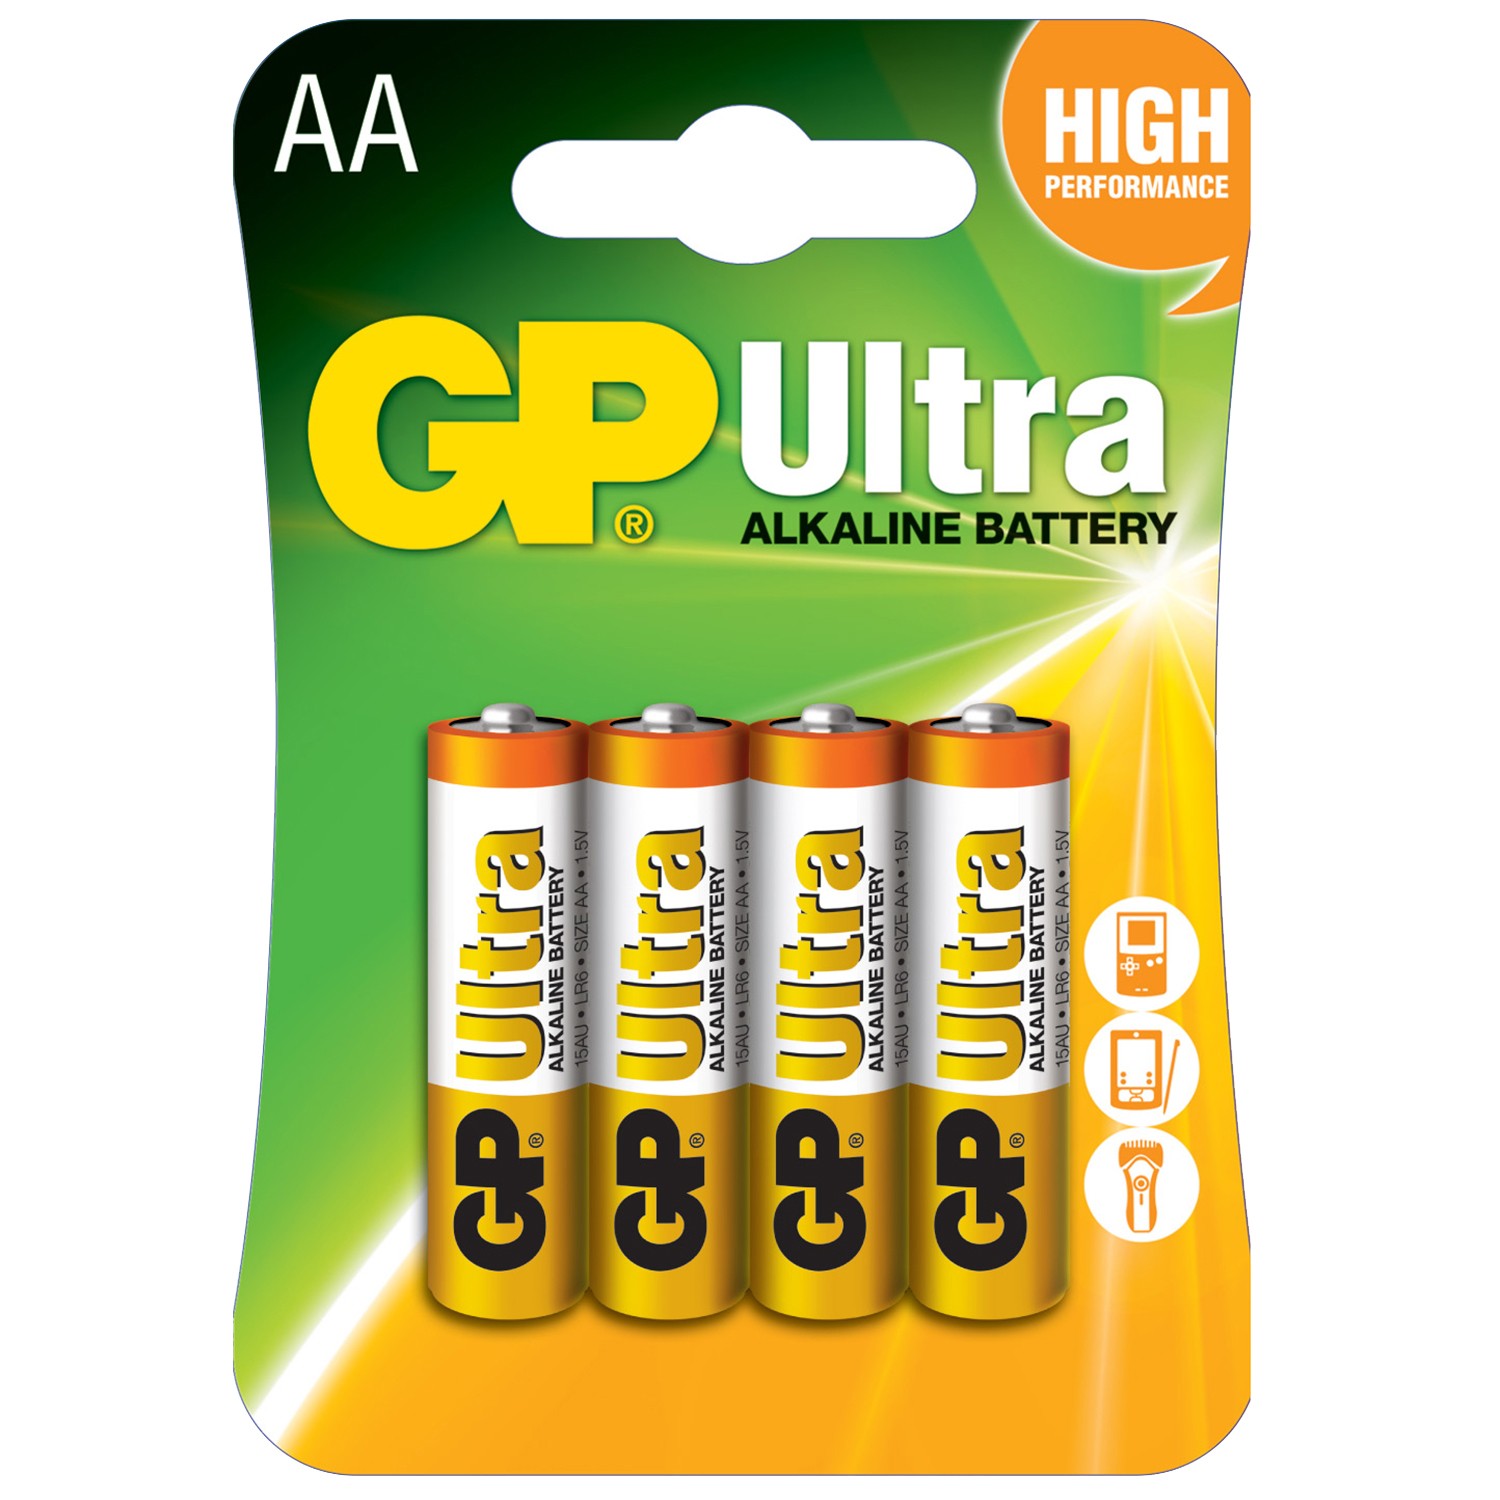 Baterie Alcalina Ultra GP R6 (aa) 4 Buc/blister